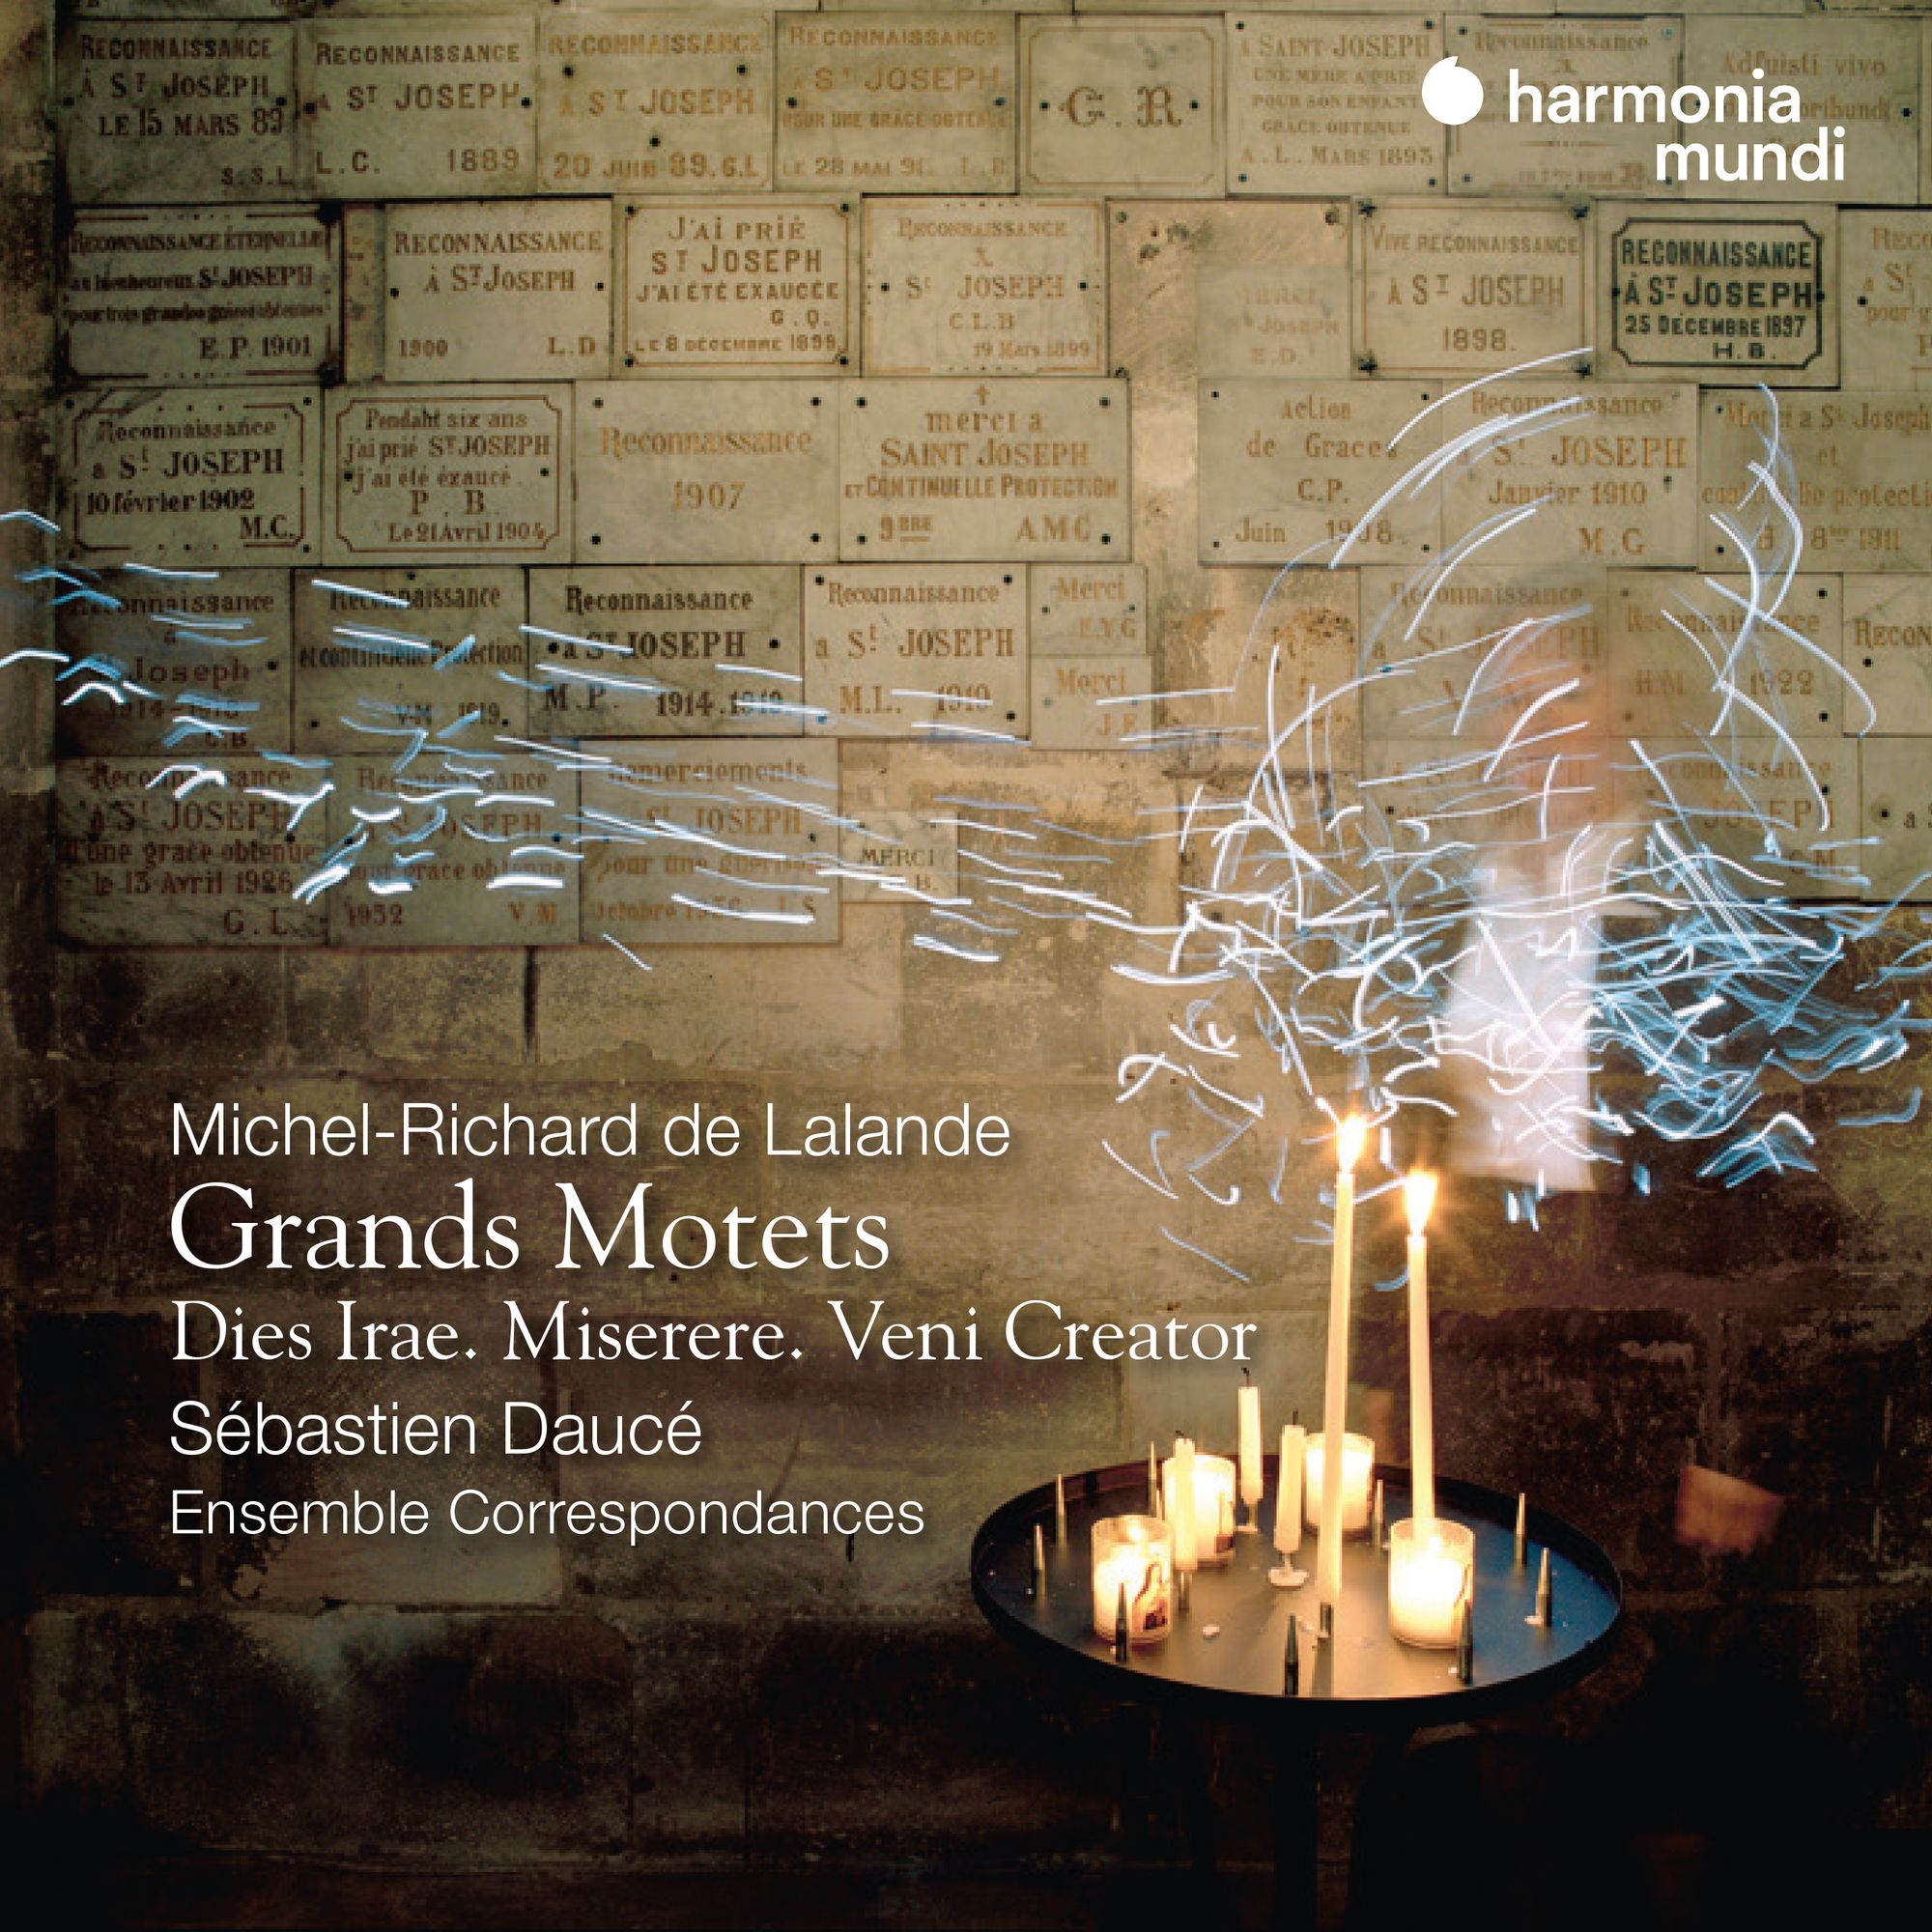 Lalande's Grands Motets from Harmonia Mundi